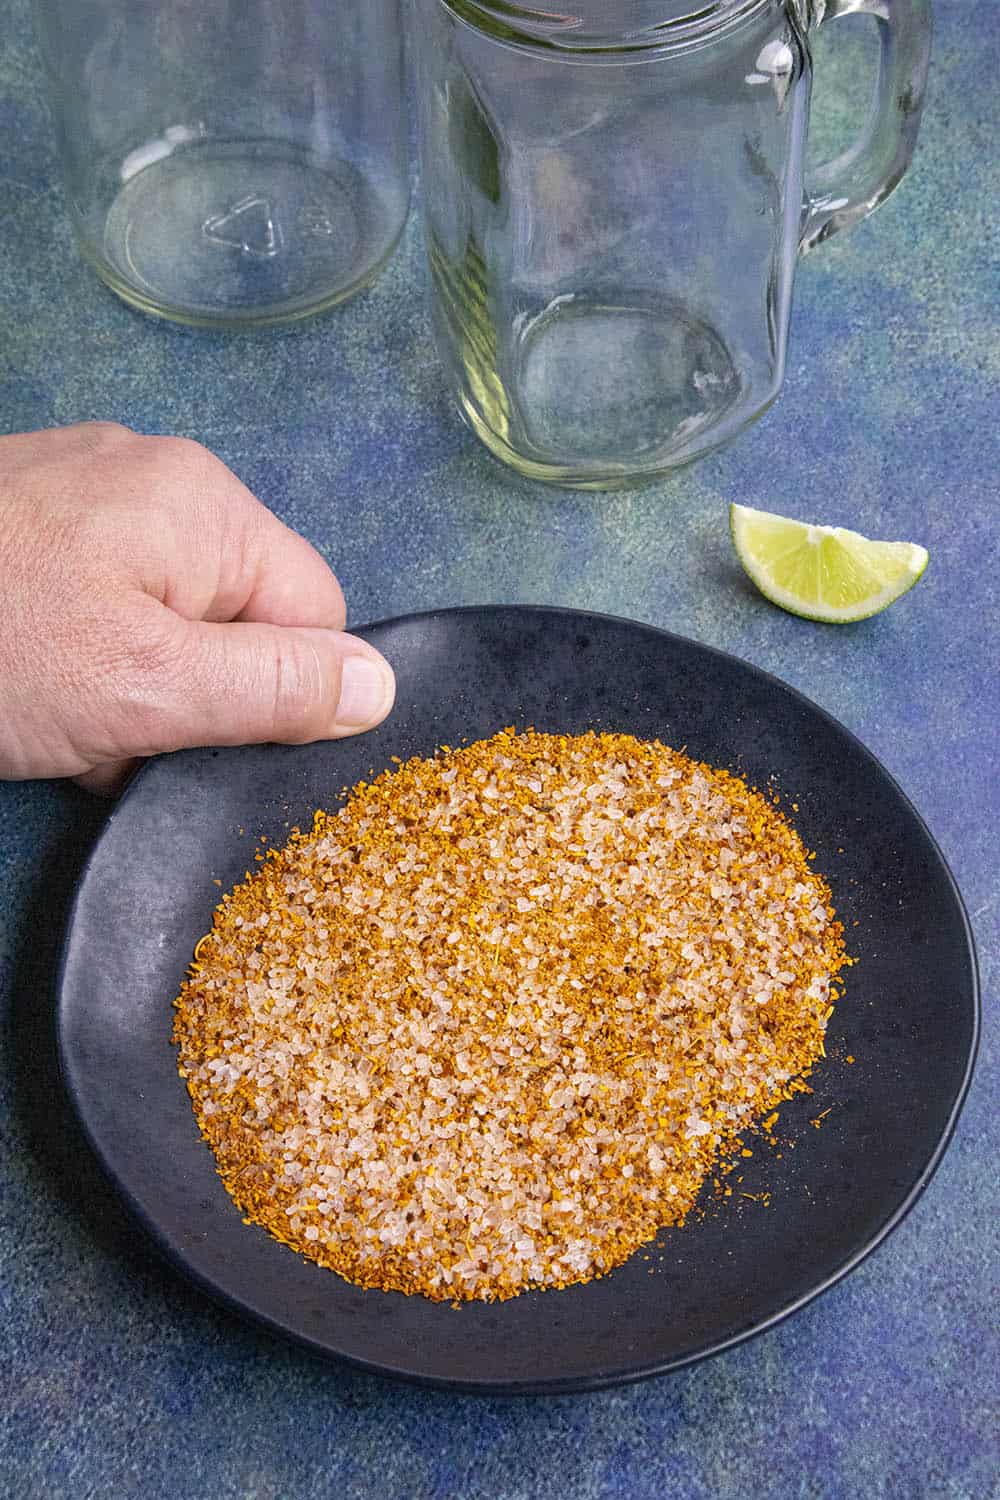 Salt and Tajin mixture for the Michelada rim